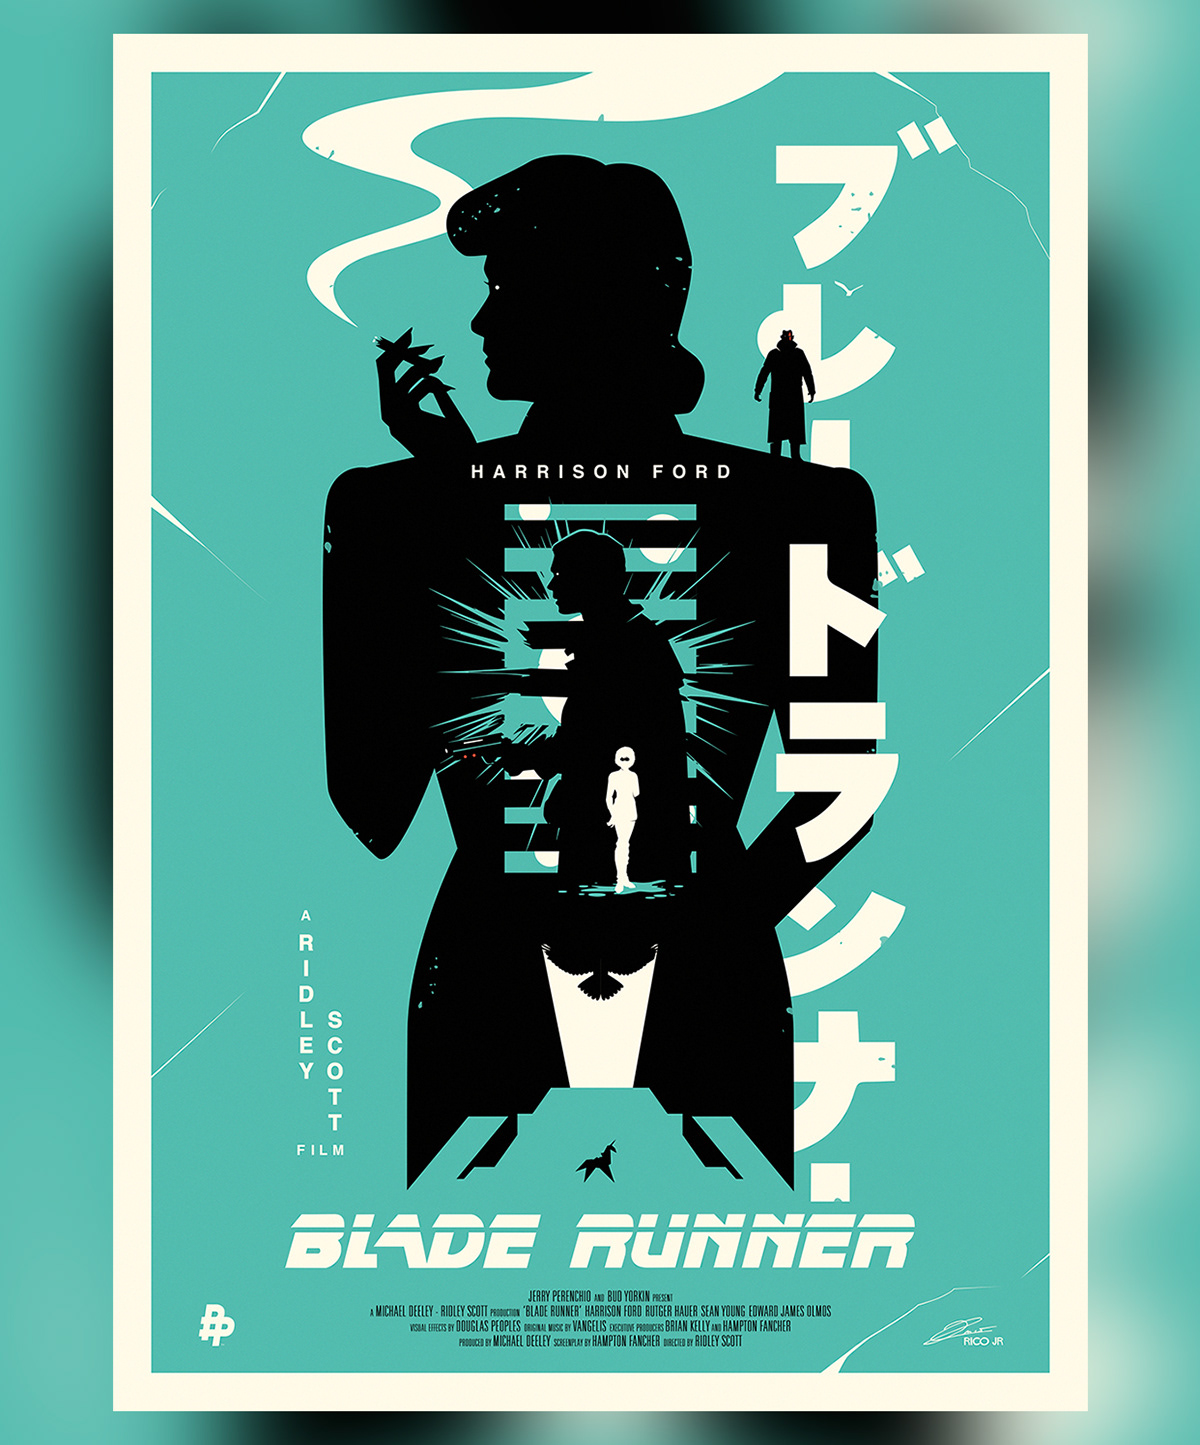 Advertising  blade runner Cinema designer ILLUSTRATION  key art magazine minimalist movie poster science fiction